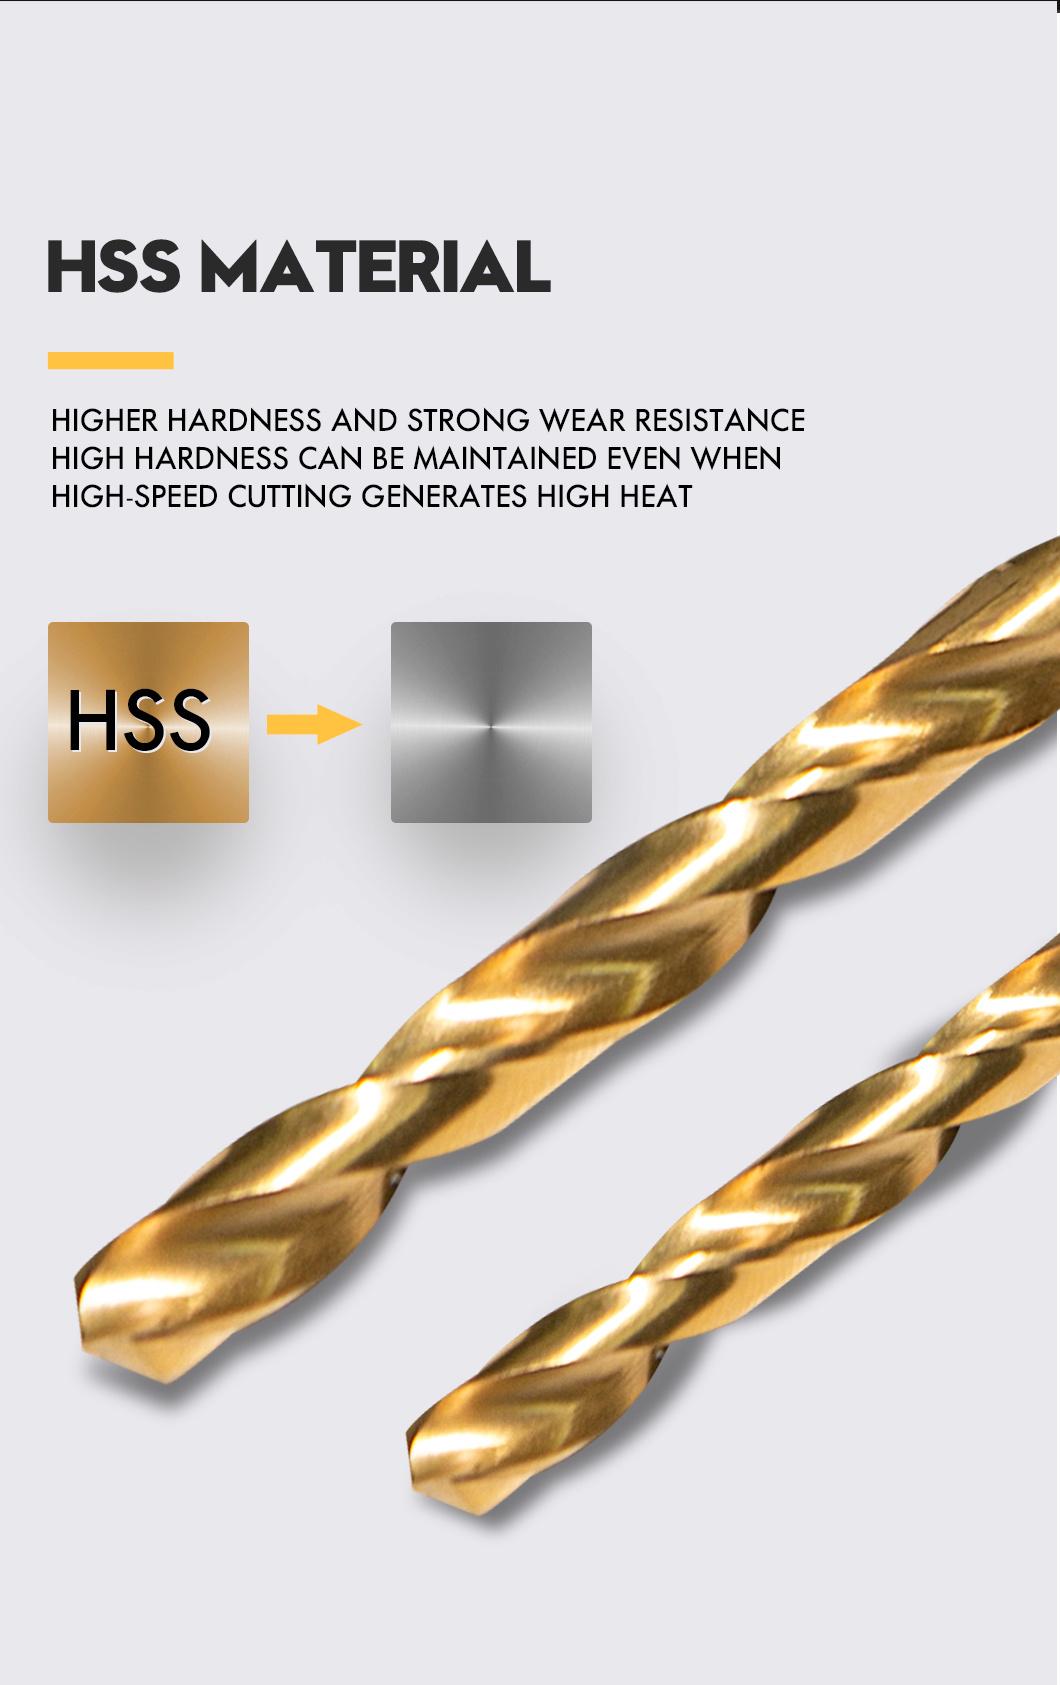 Pegatec HSS Shank Twist Drill Bits for Stainless Steel/Steel/Metal